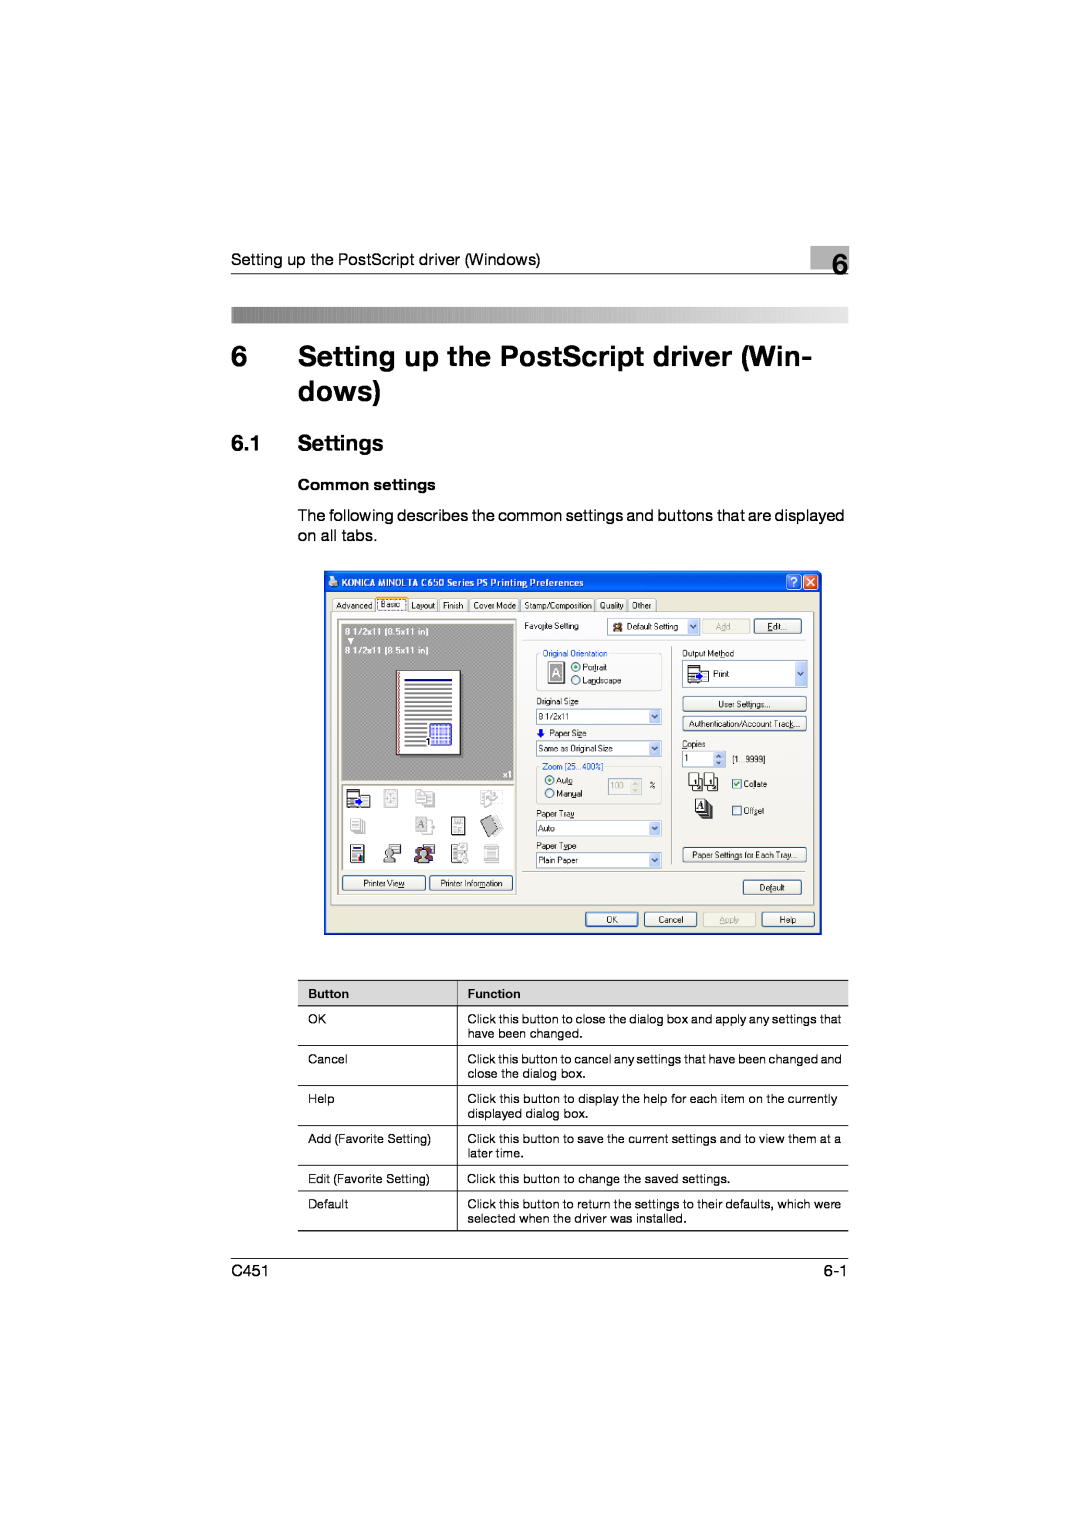 Konica Minolta C451 manual 6Setting up the PostScript driver Win- dows, 6.1Settings 